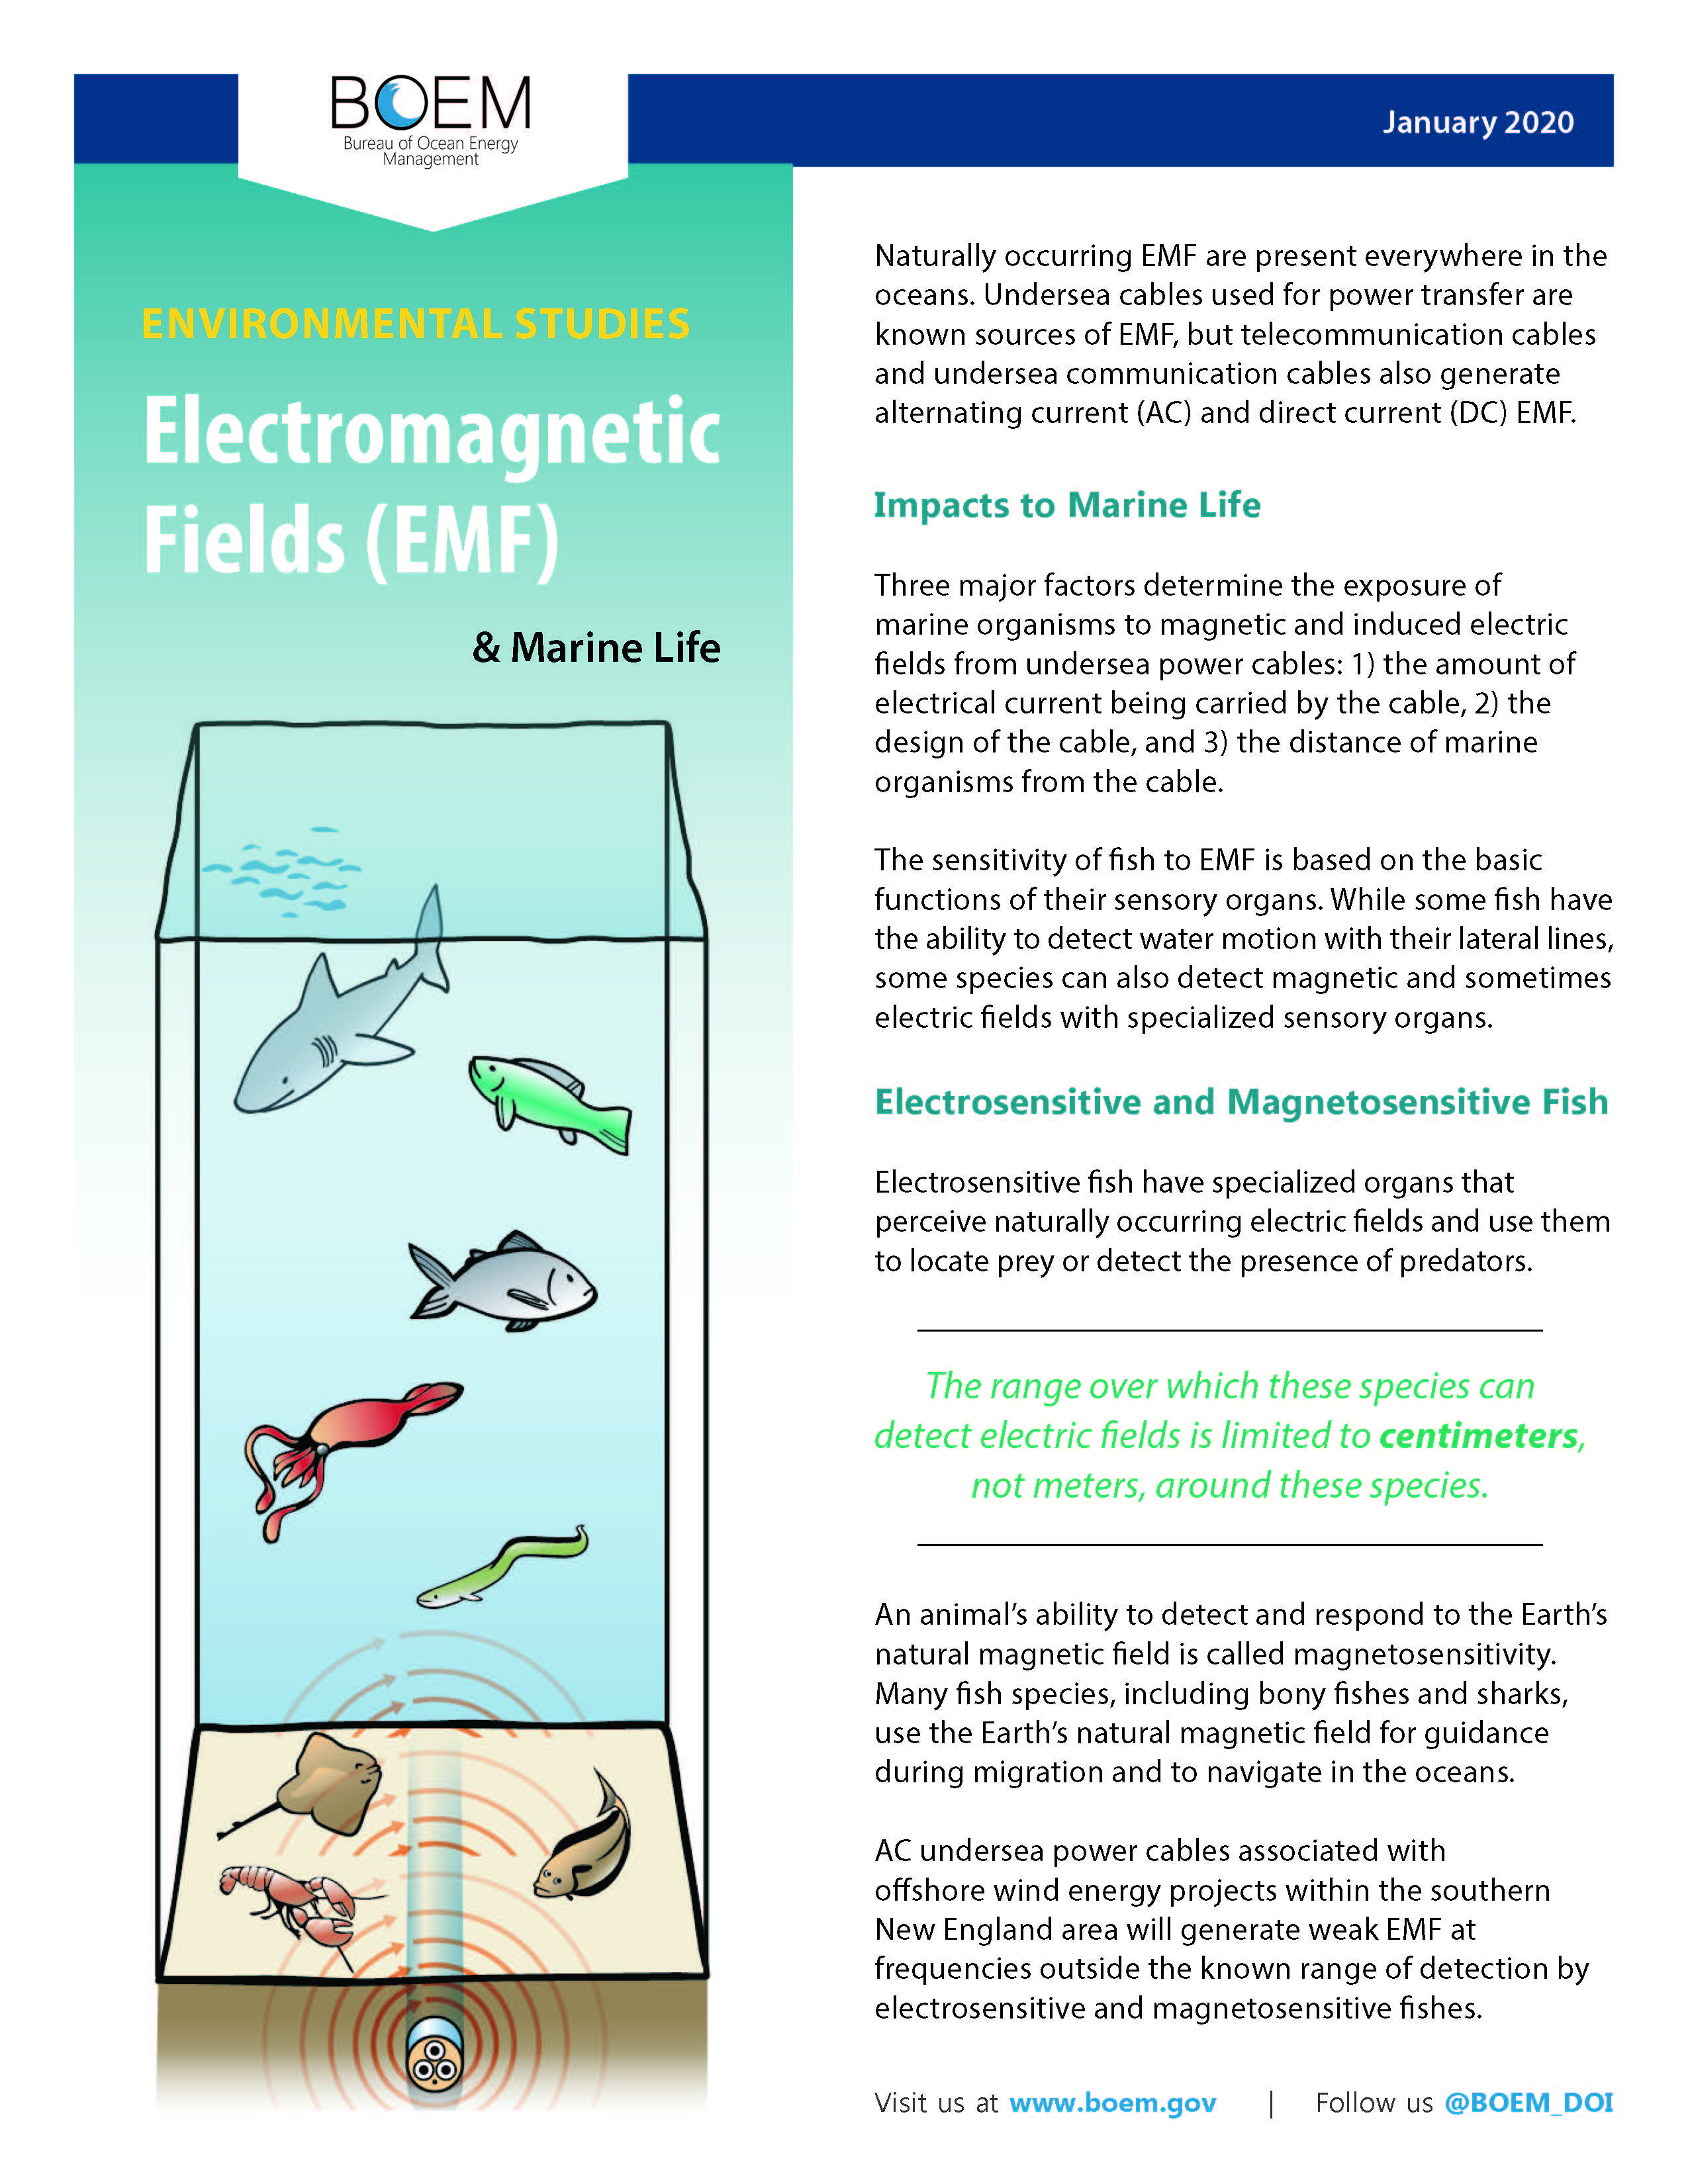 Electromagnetic Fields (EMF)